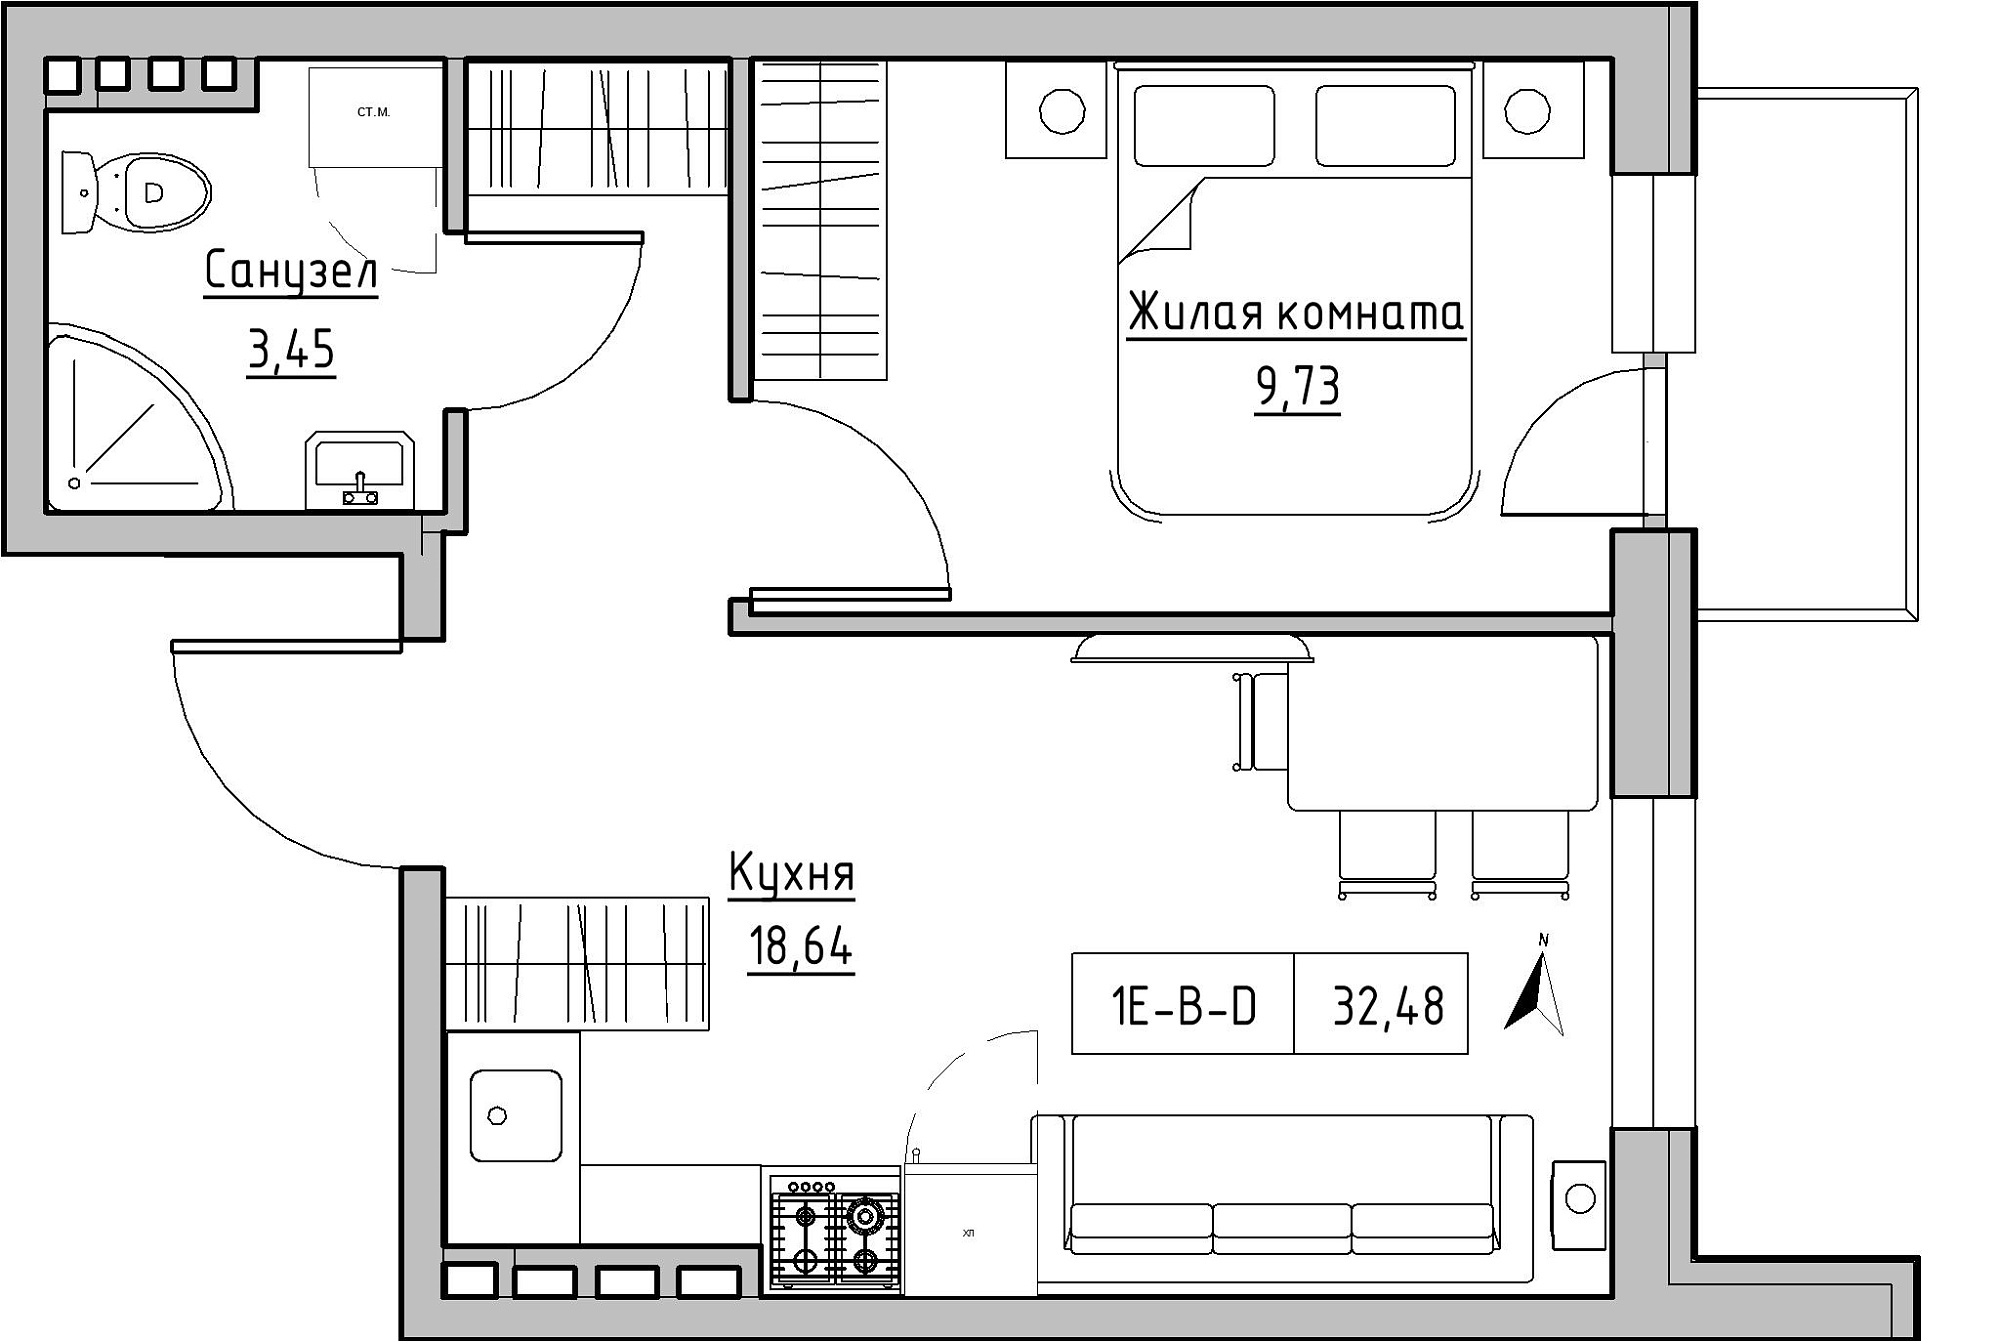 Planning 1-rm flats area 32.48m2, KS-024-03/0015.